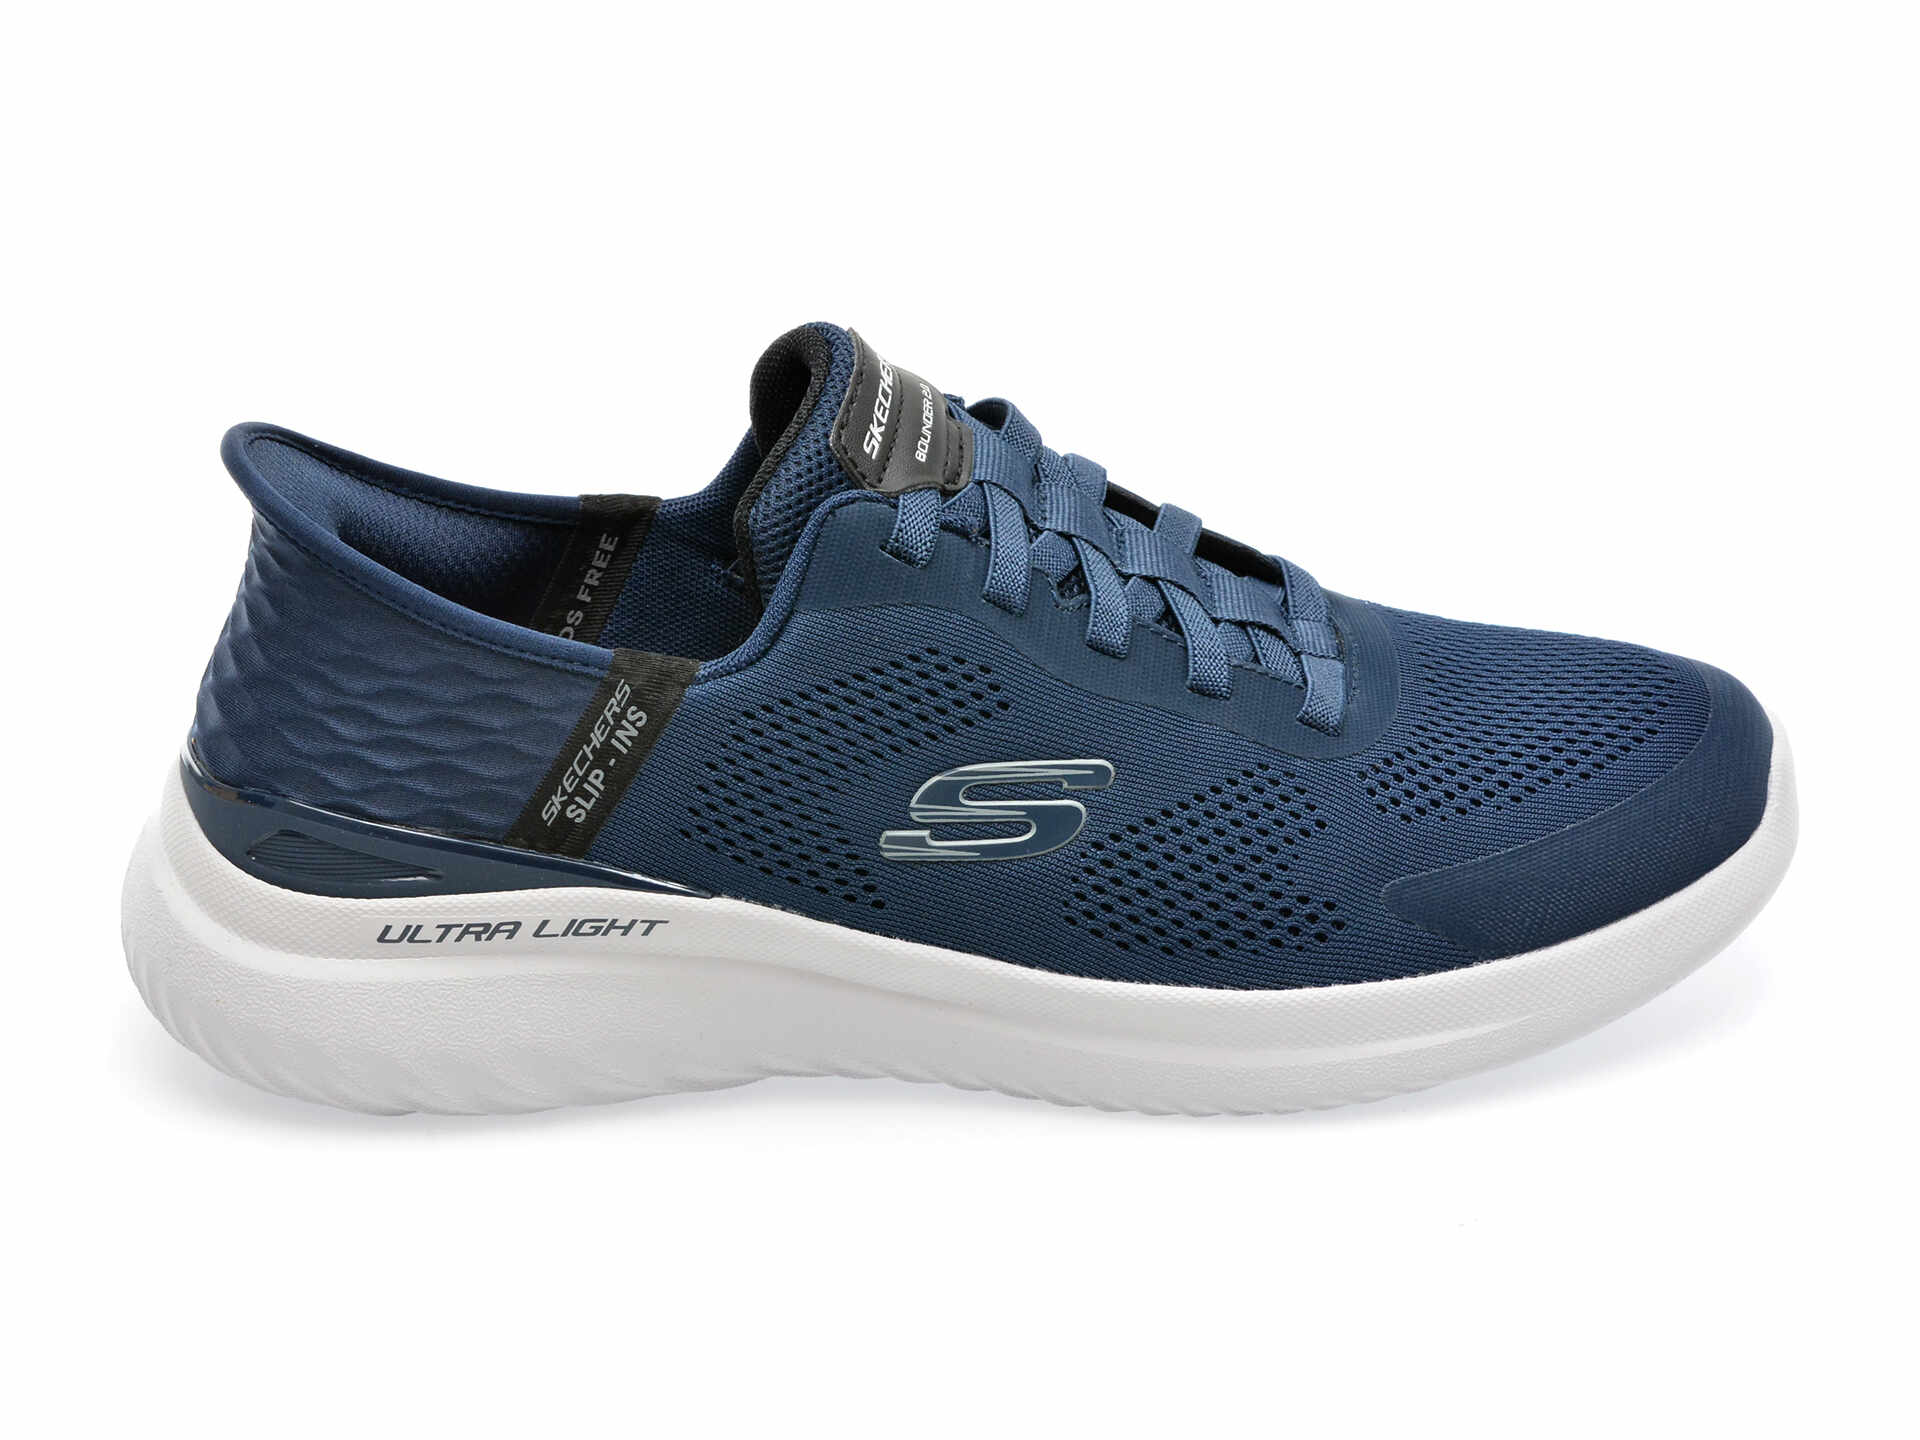 Pantofi sport SKECHERS bleumarin, BOUNDER 2.0, din piele ecologica